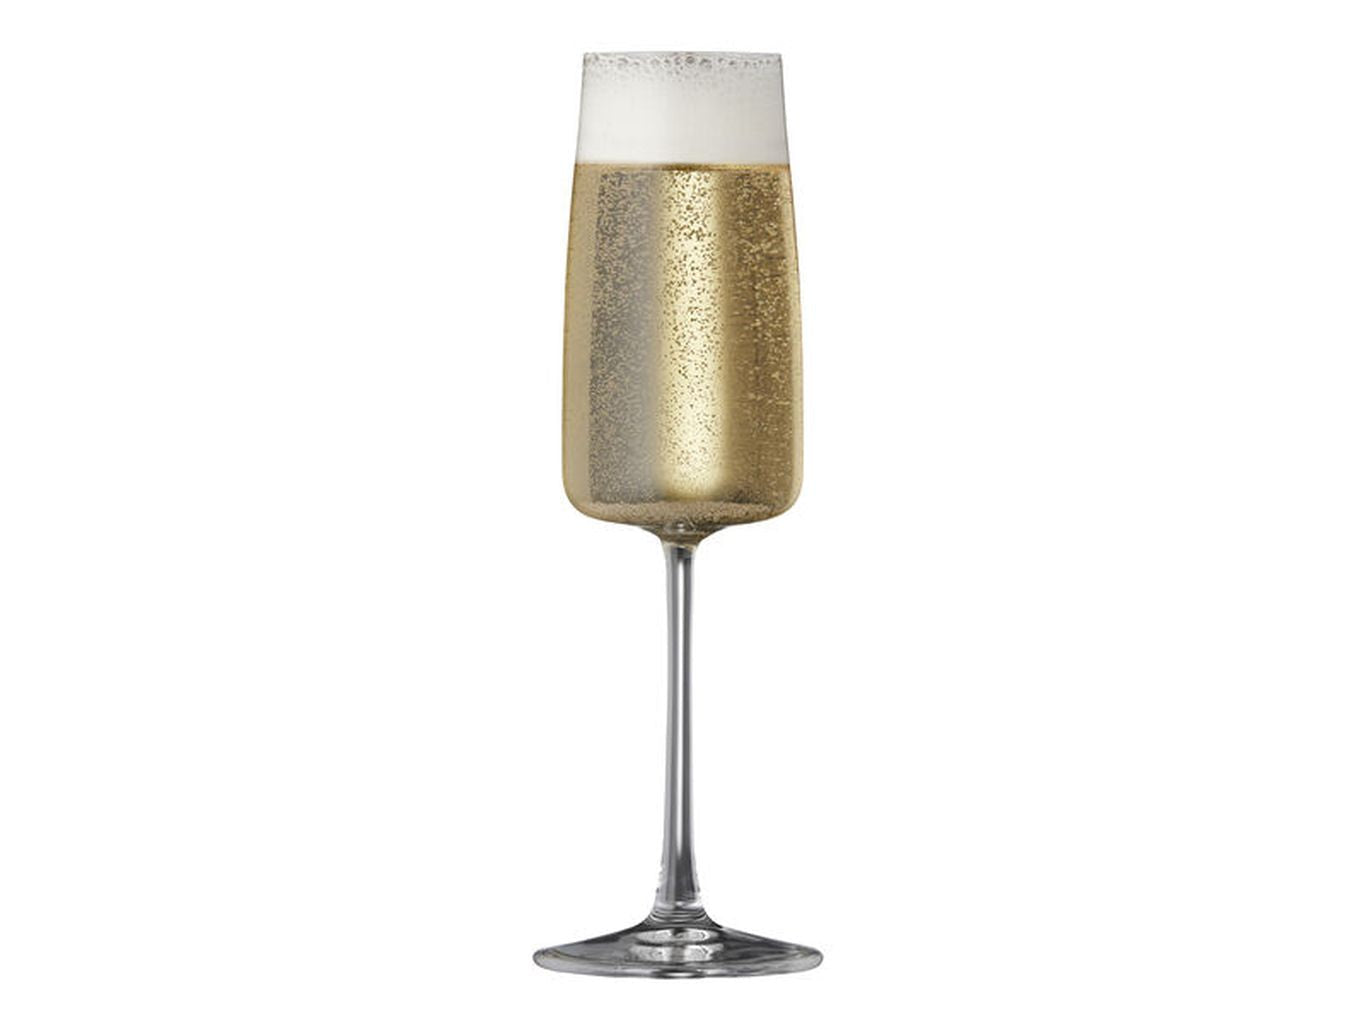 Lyngby Glas Zero Krystal Champagne Glass 30 Cl, 4 PC.